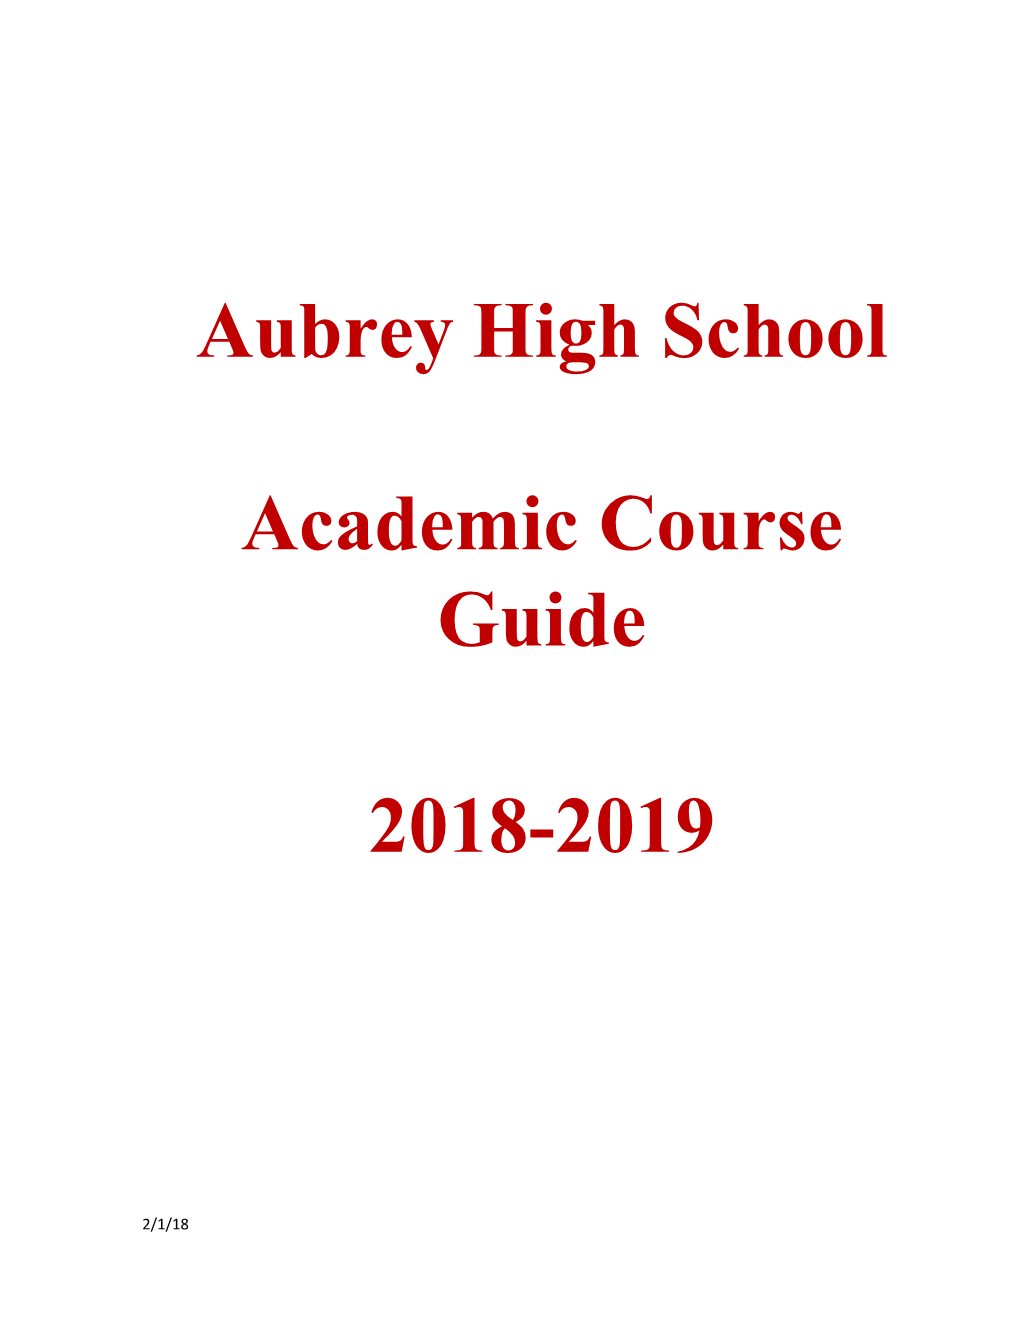 Aubrey High School Academic Course Guide 2018-2019